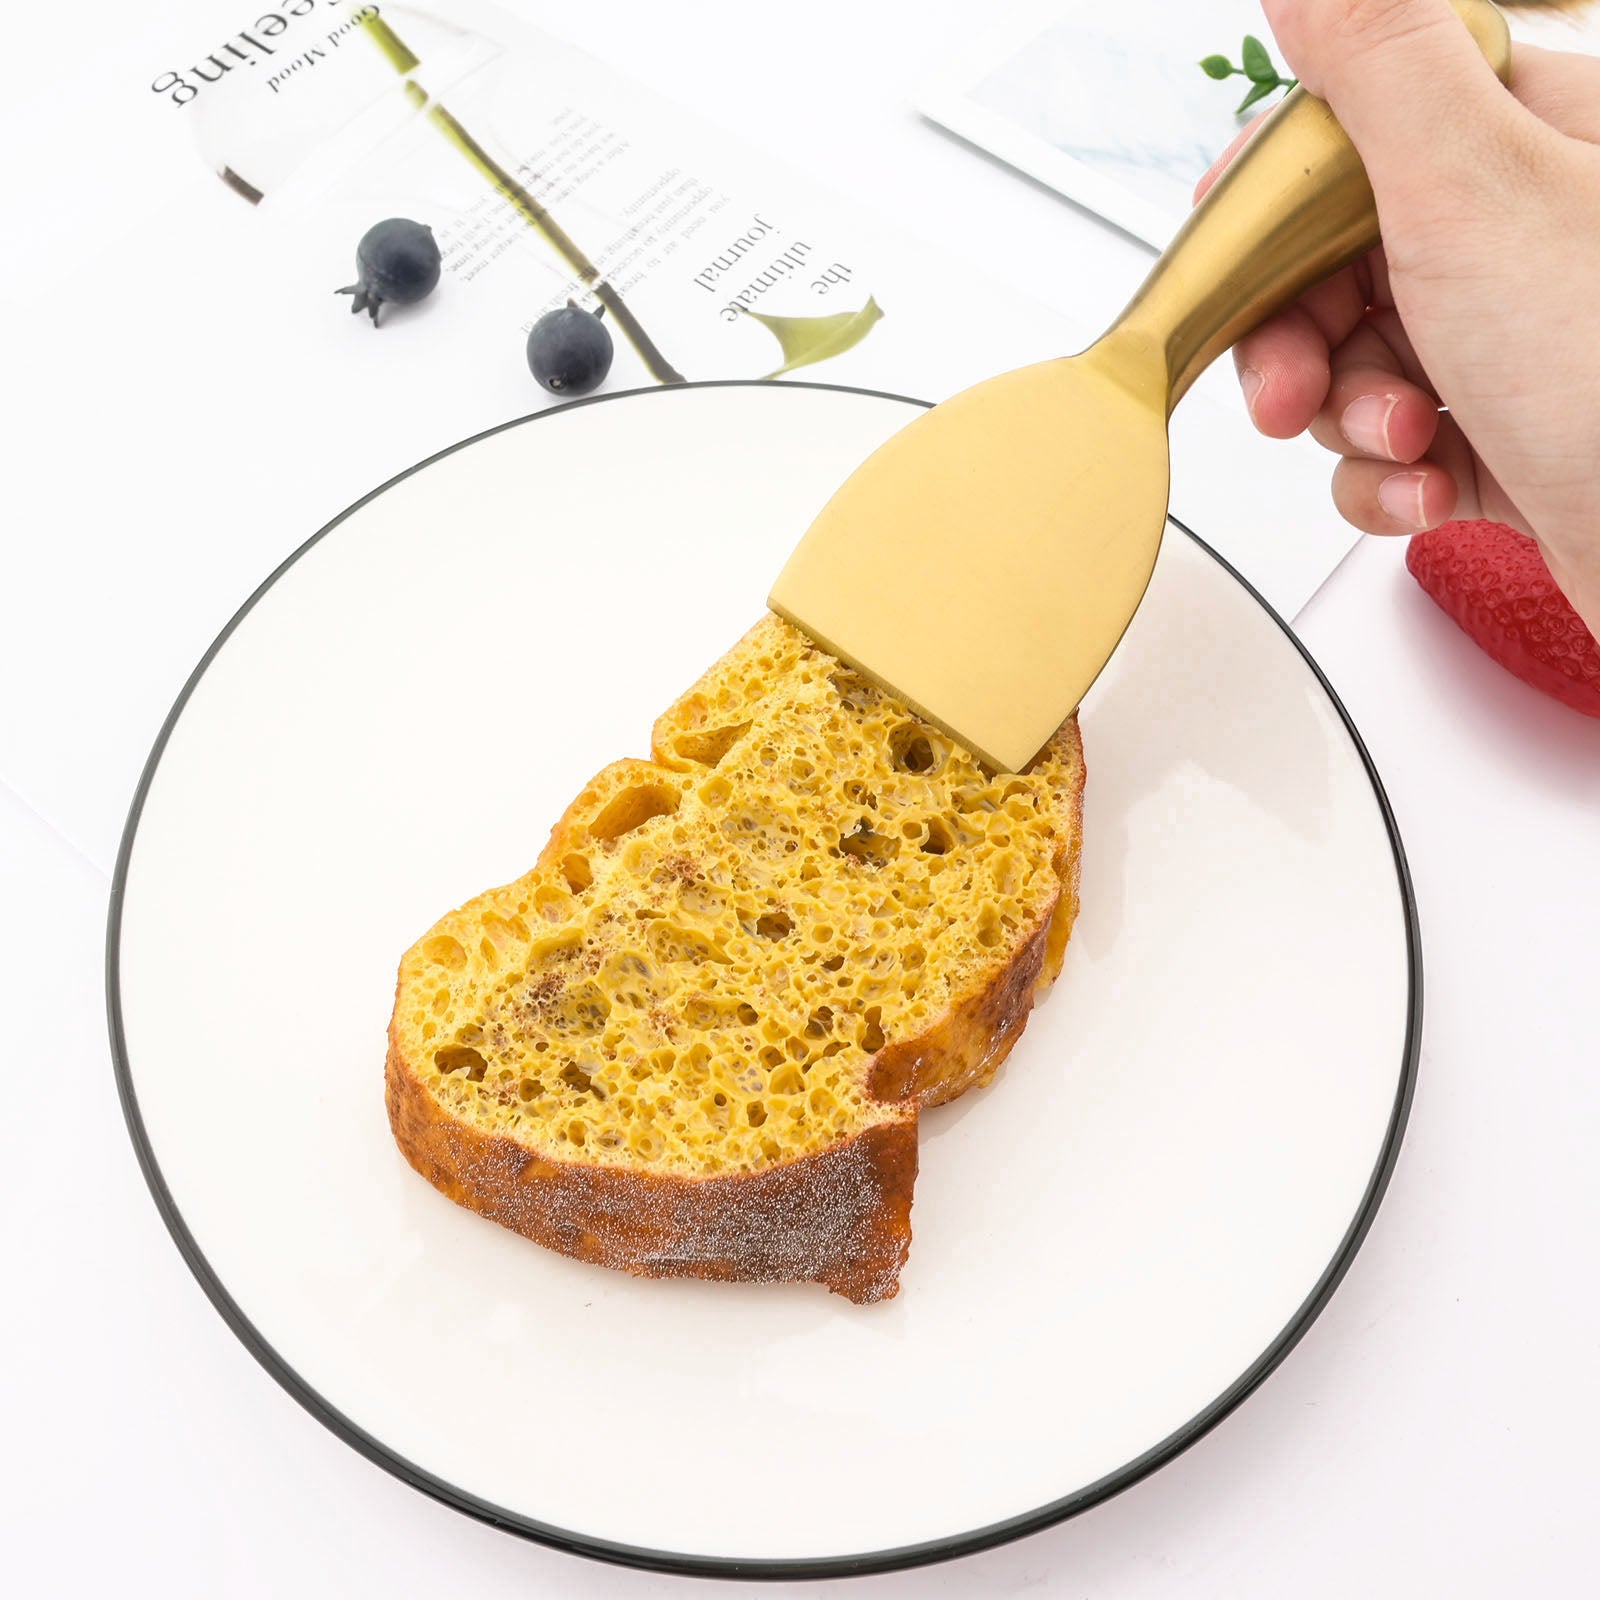 Cheese Knife Set